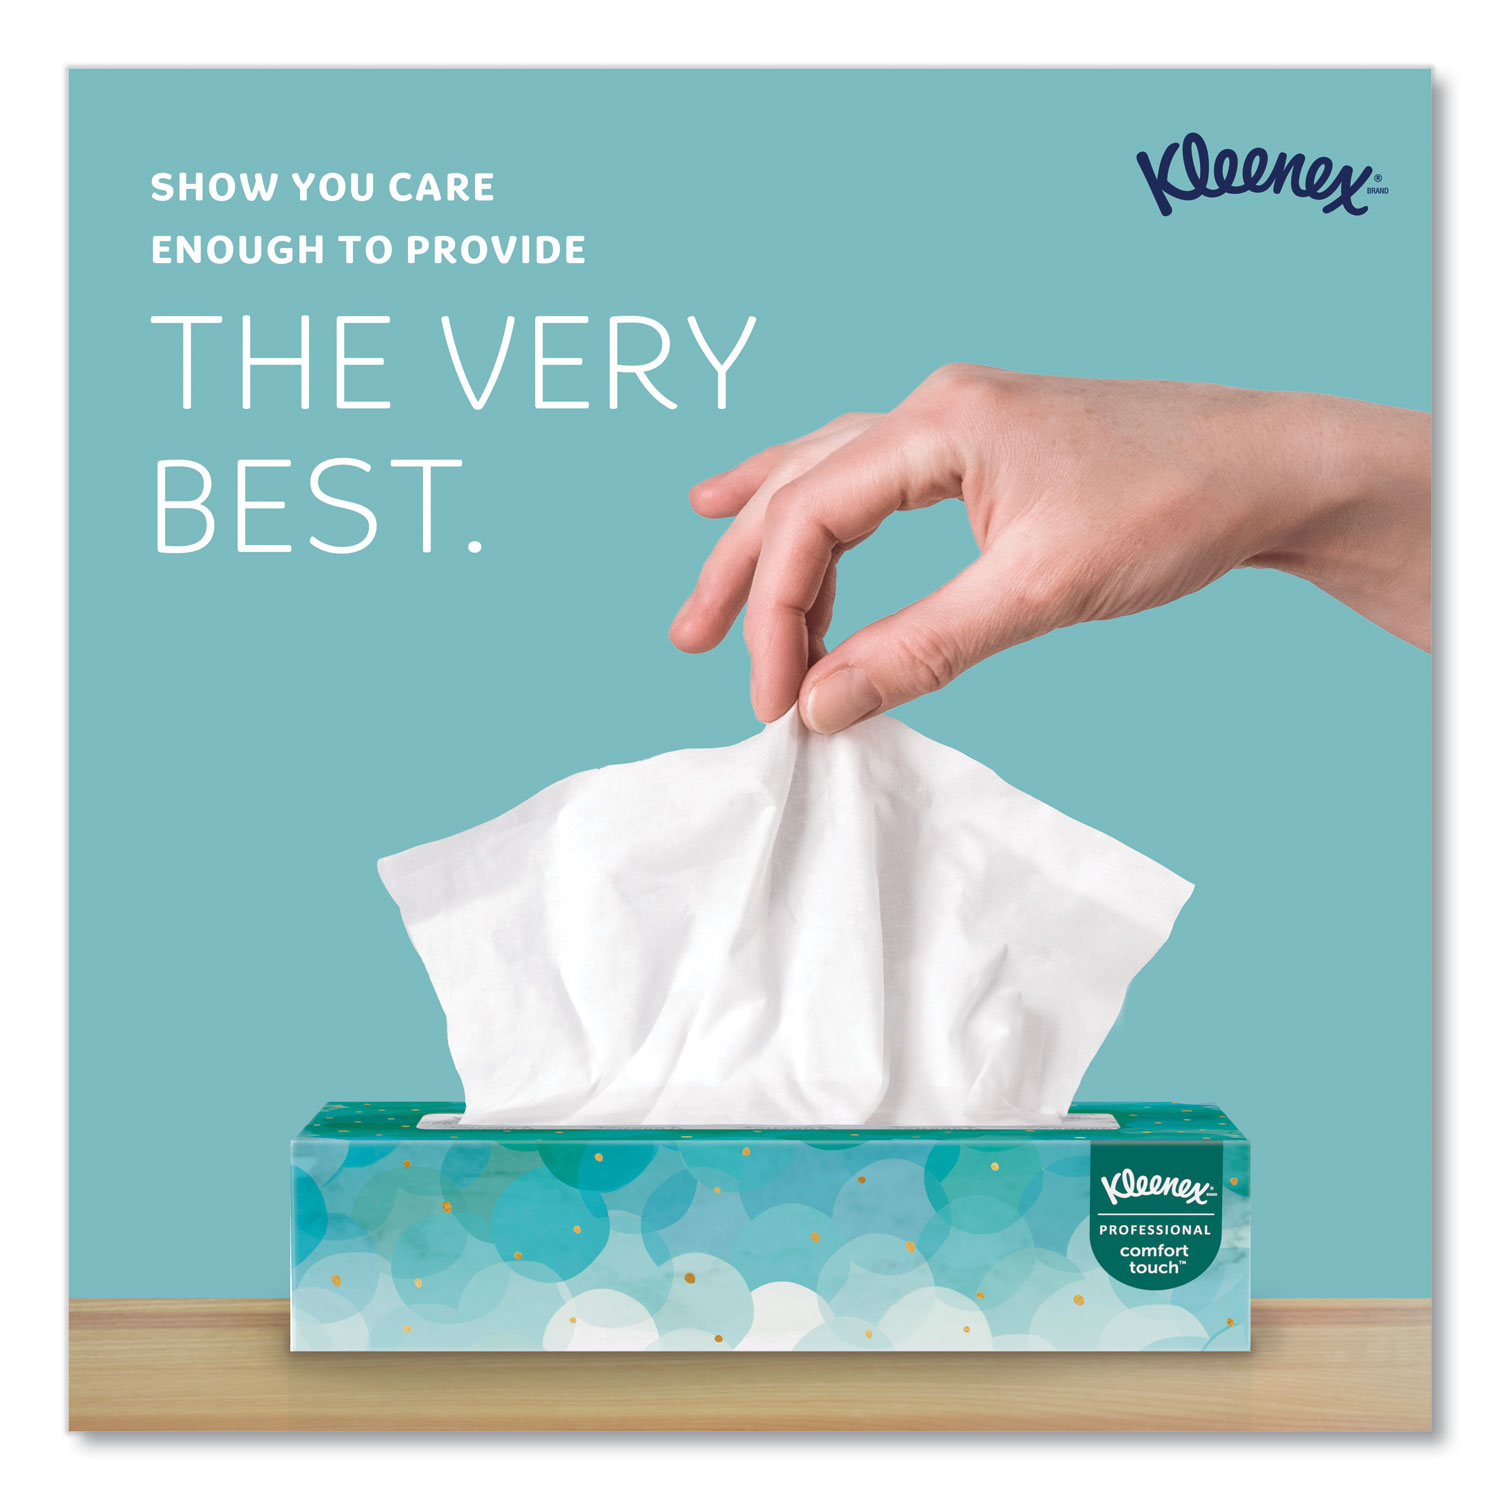 Kleenex® Facial Tissues 8824 - 3 Ply Boxed Tissues - 12 Flat Tissue Boxes x  72 White Facial Tissues (864 sheets)